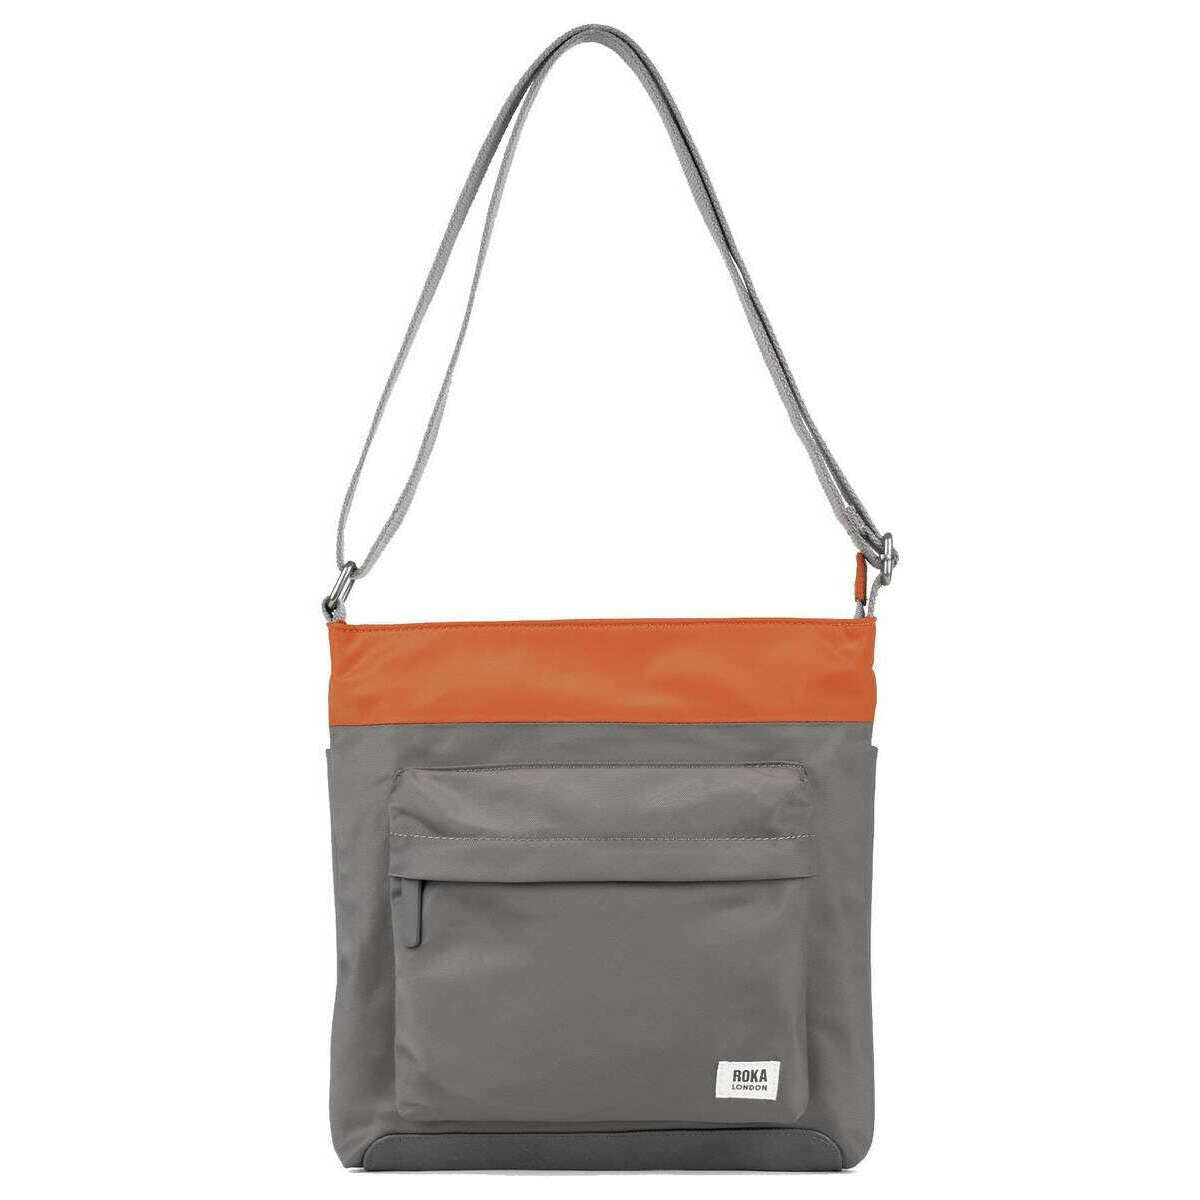 Roka Kennington B Medium Creative Waste Two Tone Recycled Nylon Crossbody Bag - Graphite Grey/Burnt Orange